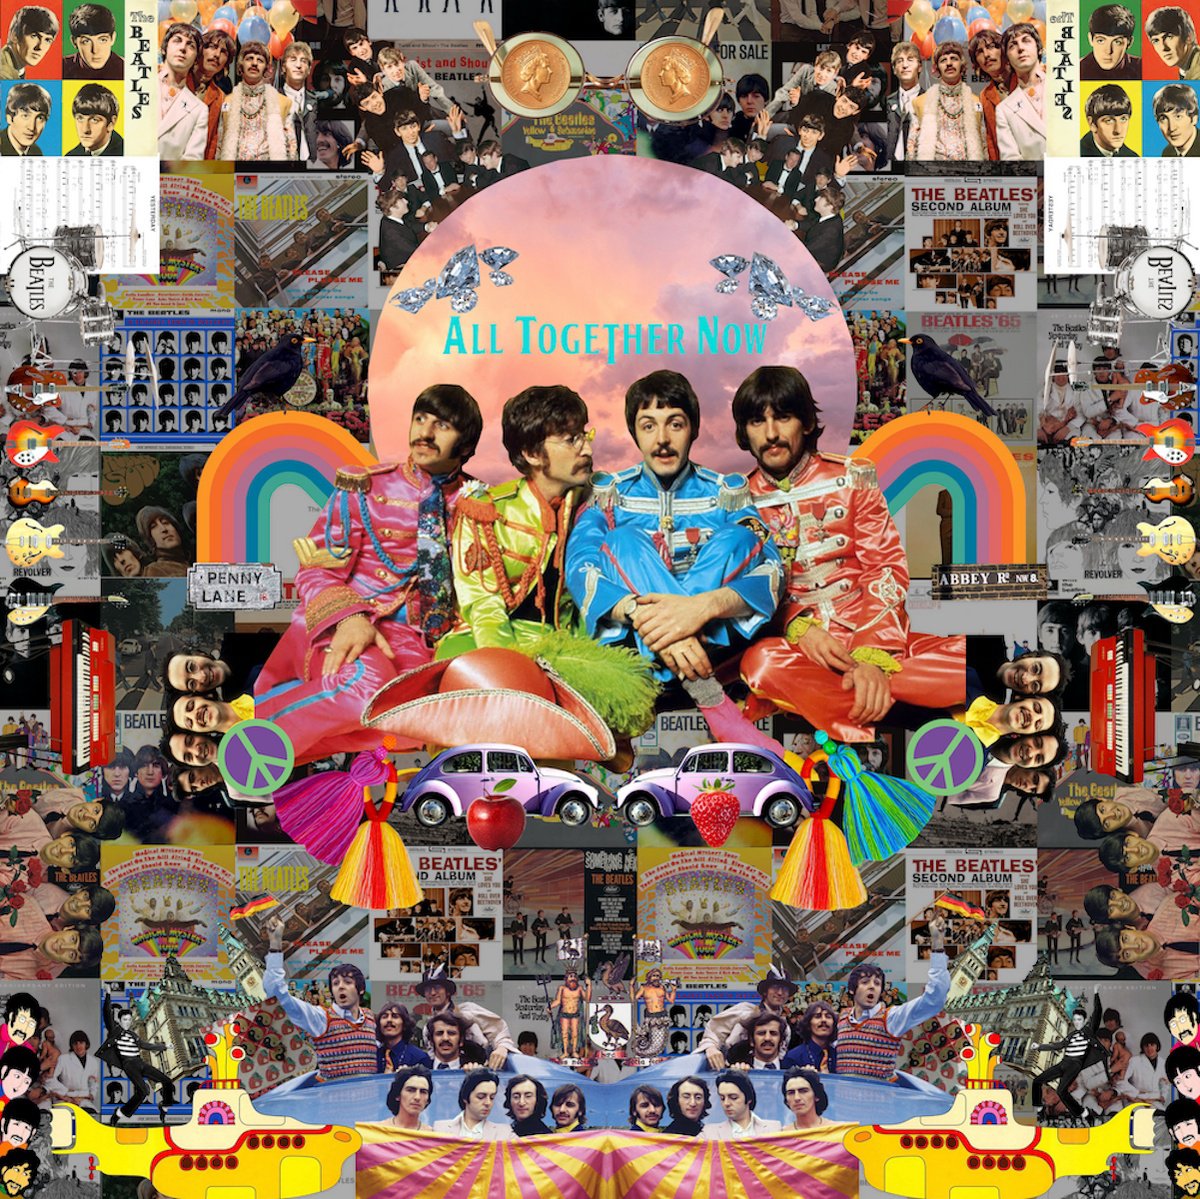 The Beatles: An Icon by Carson Parkin-Fairley